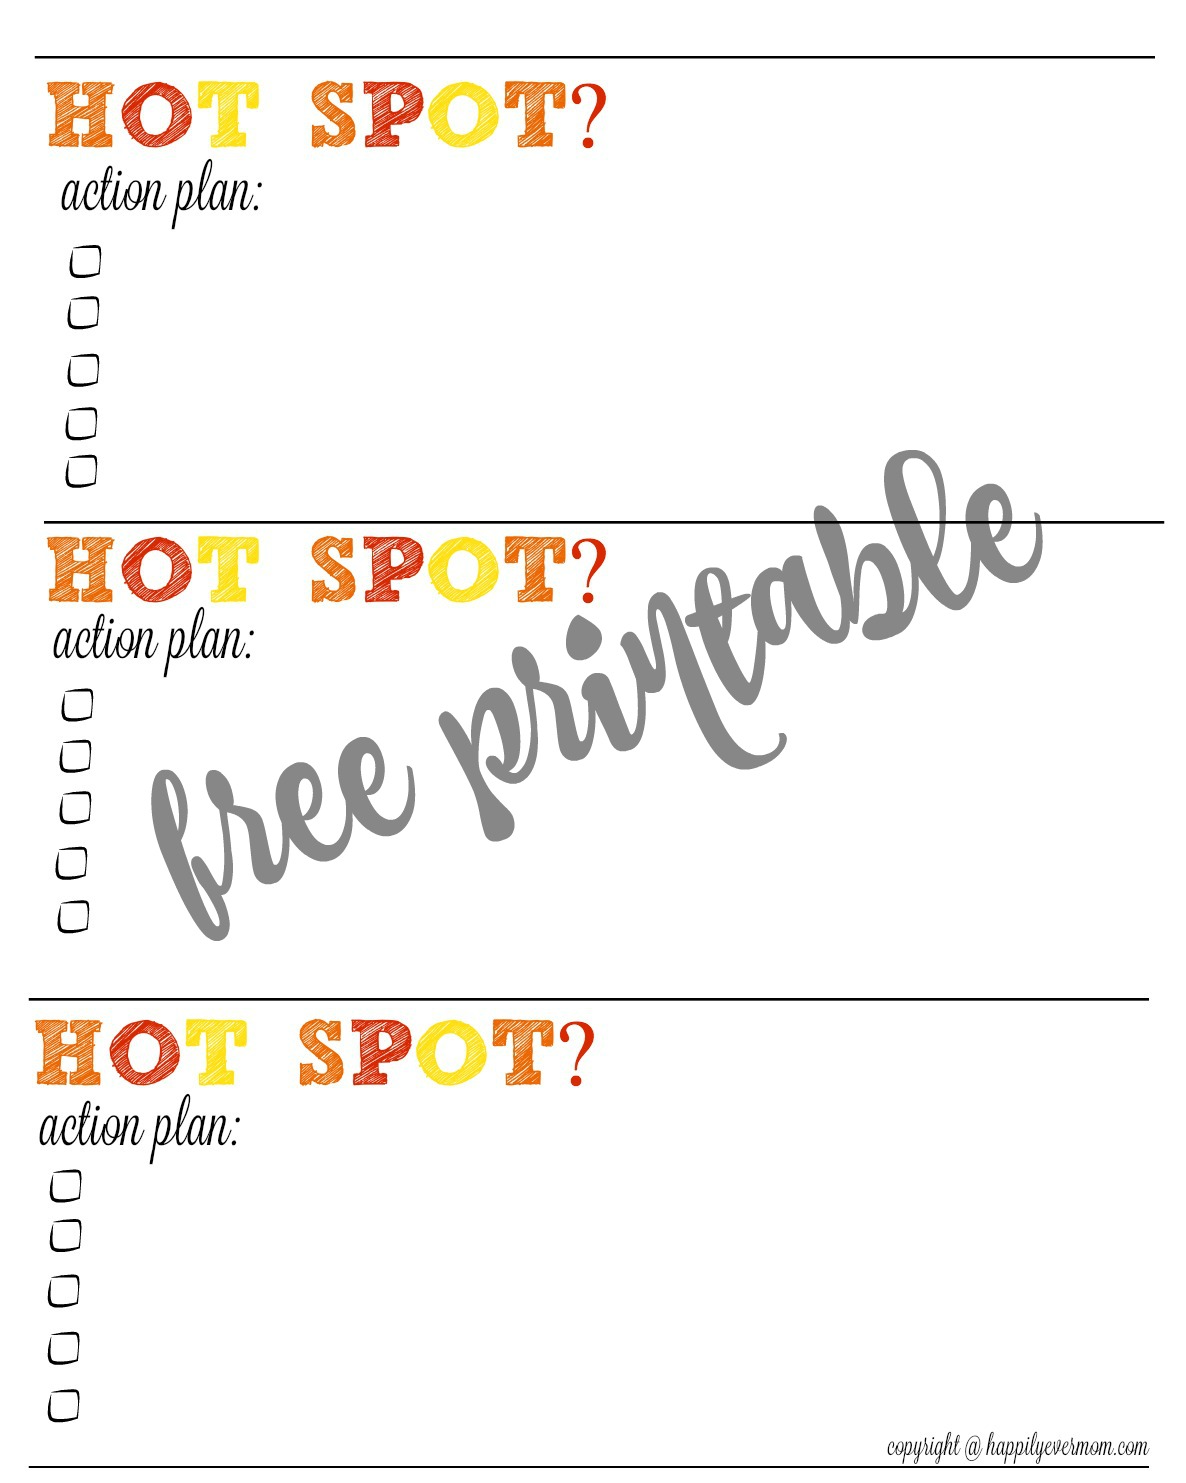 hot-spot-action-plan-printable